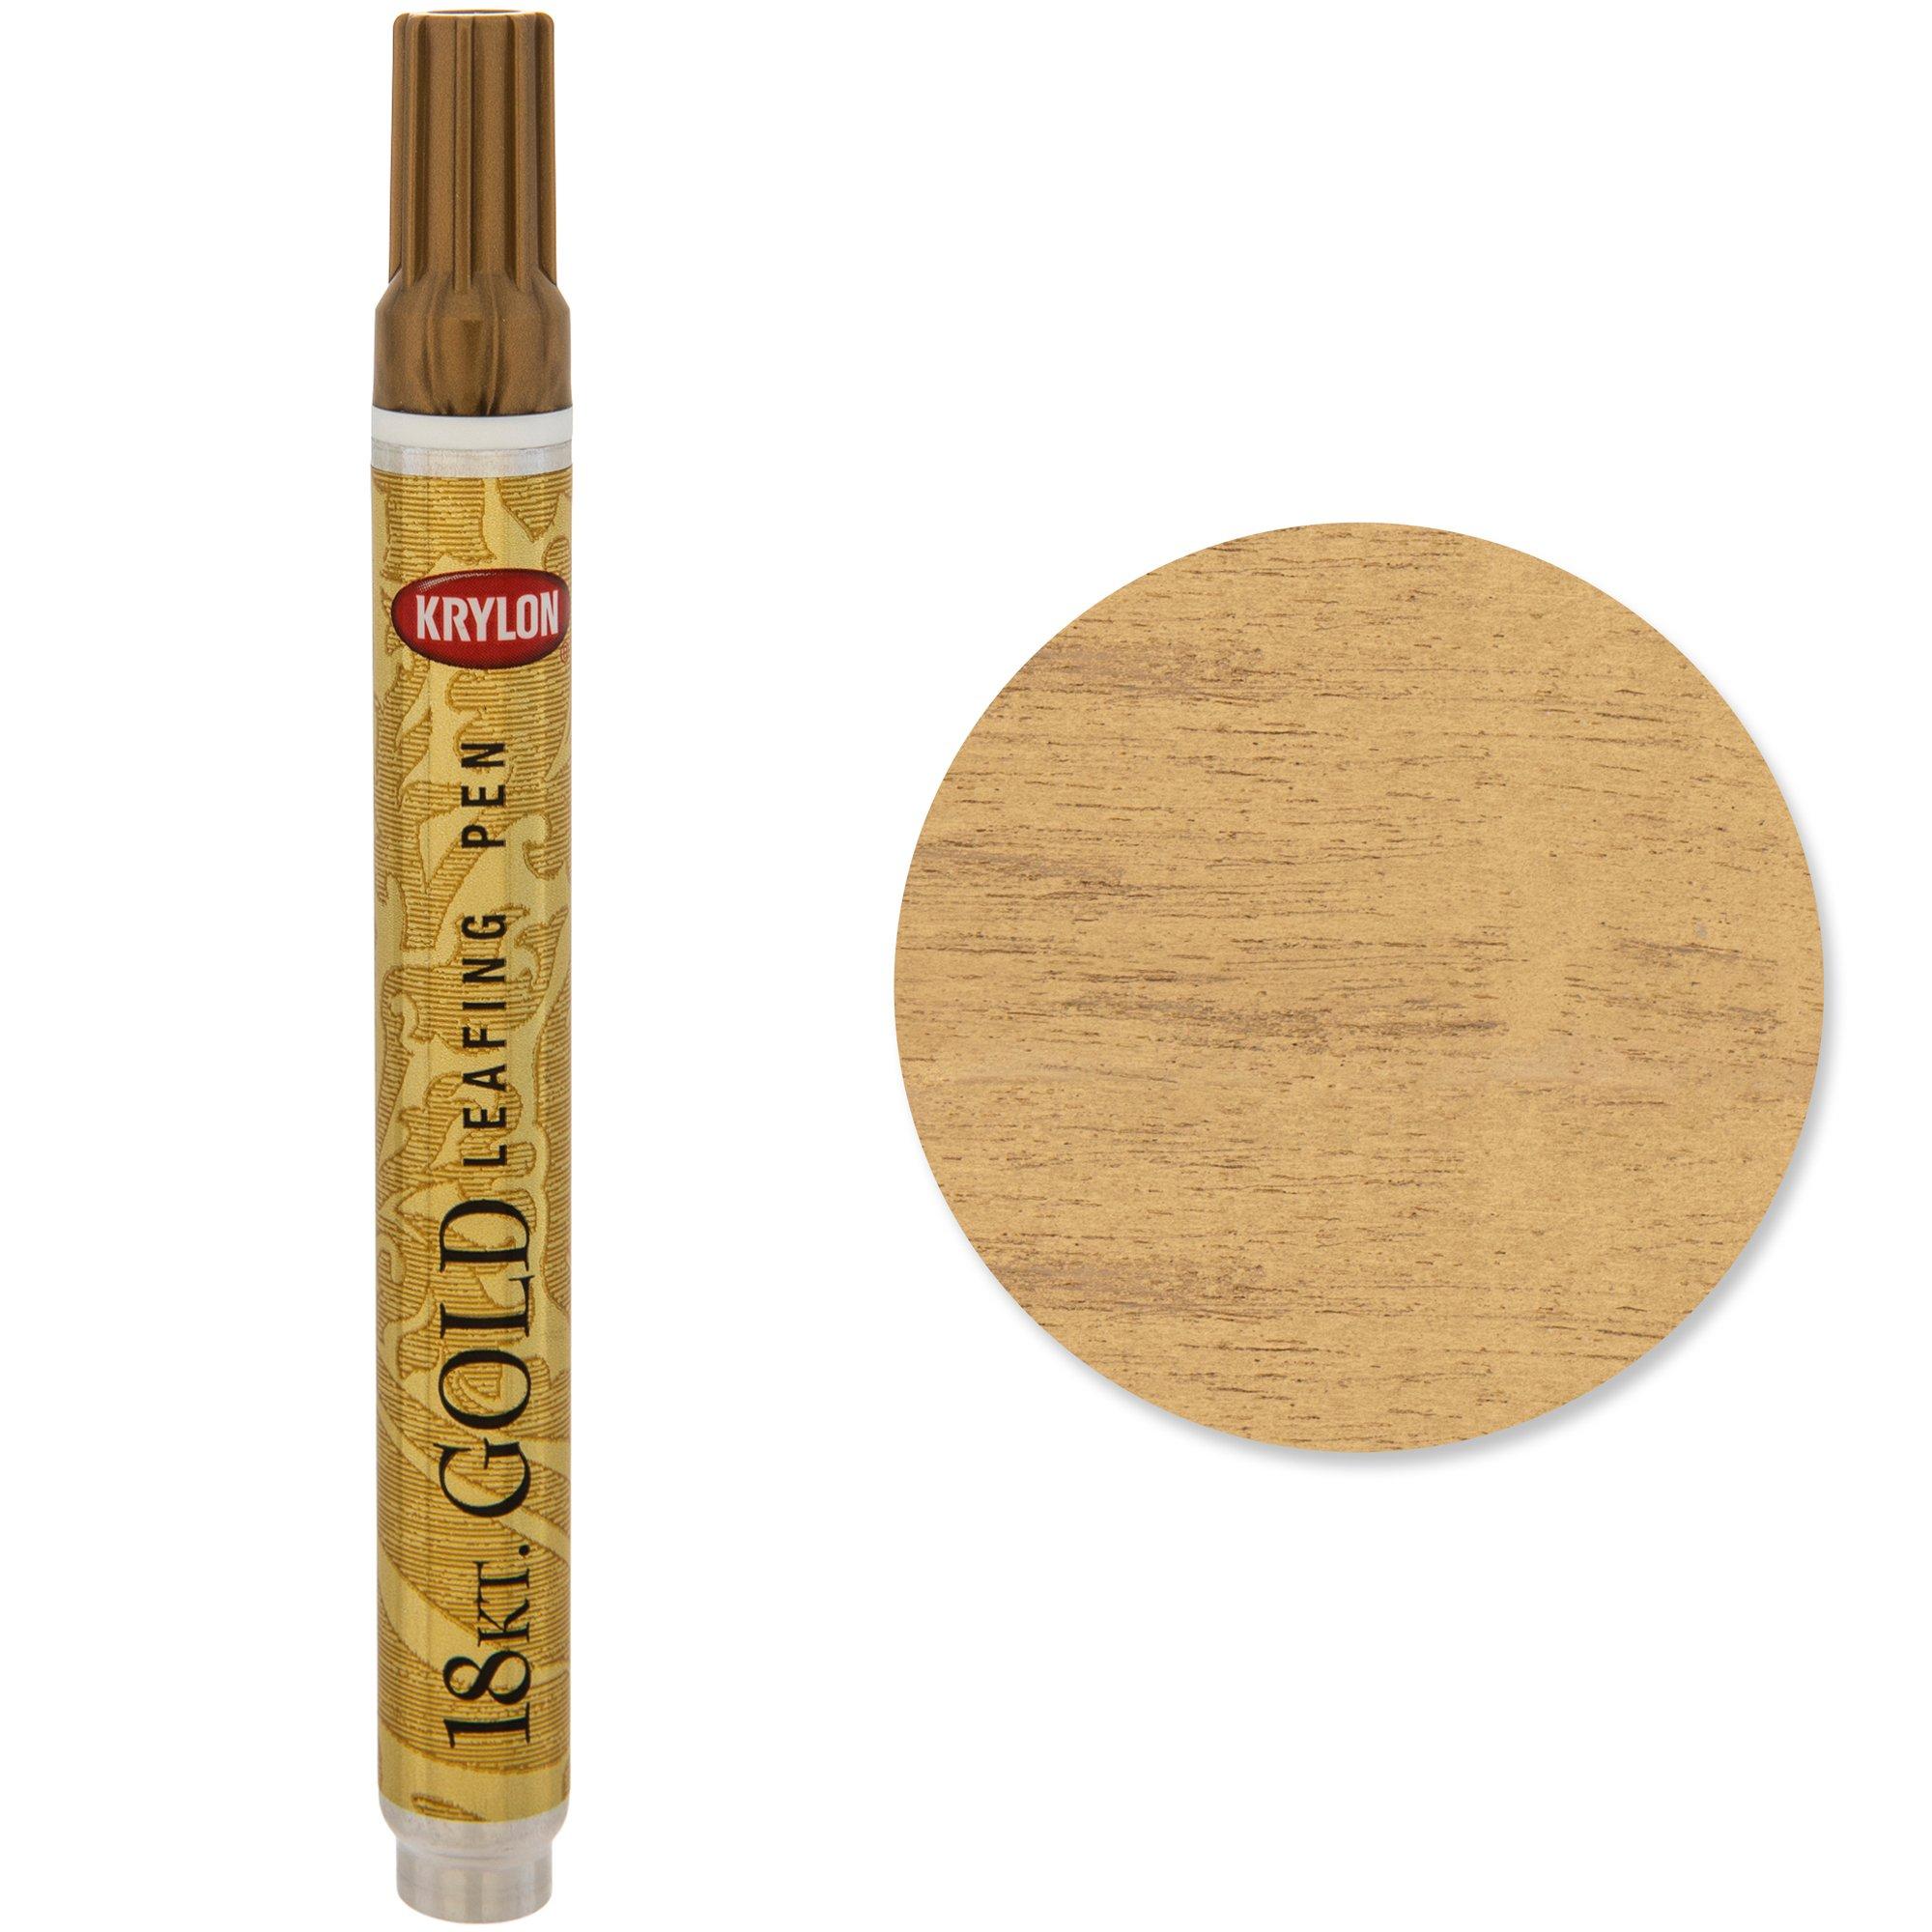 The Best Gold Leaf Metallic Paint Marker Ever!  DecoColor Premium Gold  Paint Marker Product Review 